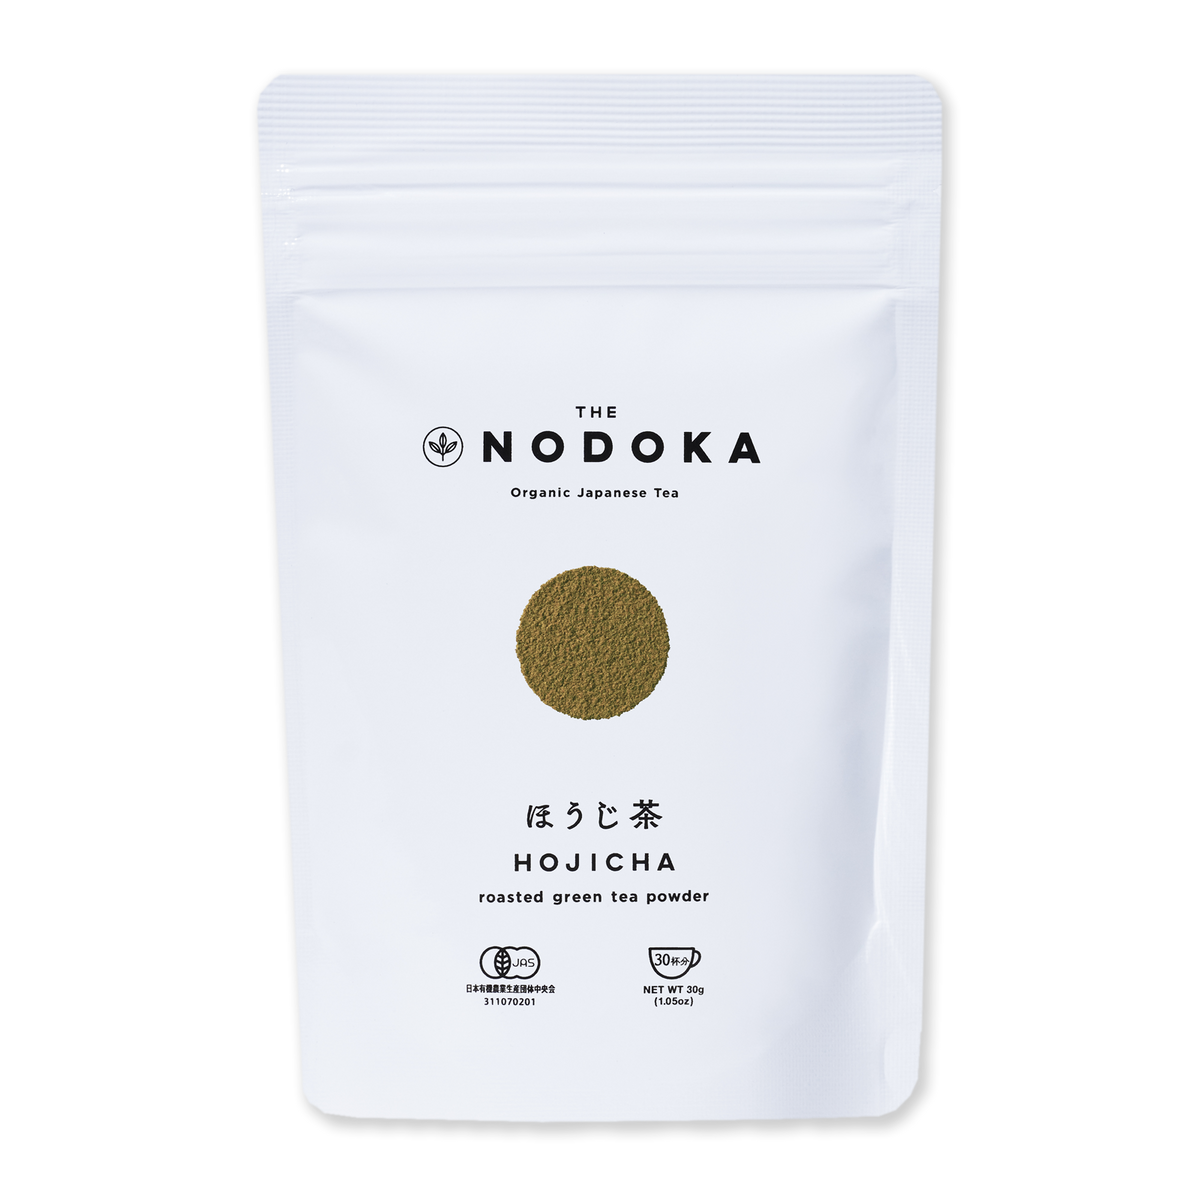 Certified Organic "Hojicha" Roasted Green Tea Powder from Japan (30g/30 Servings) - Horizon Farms